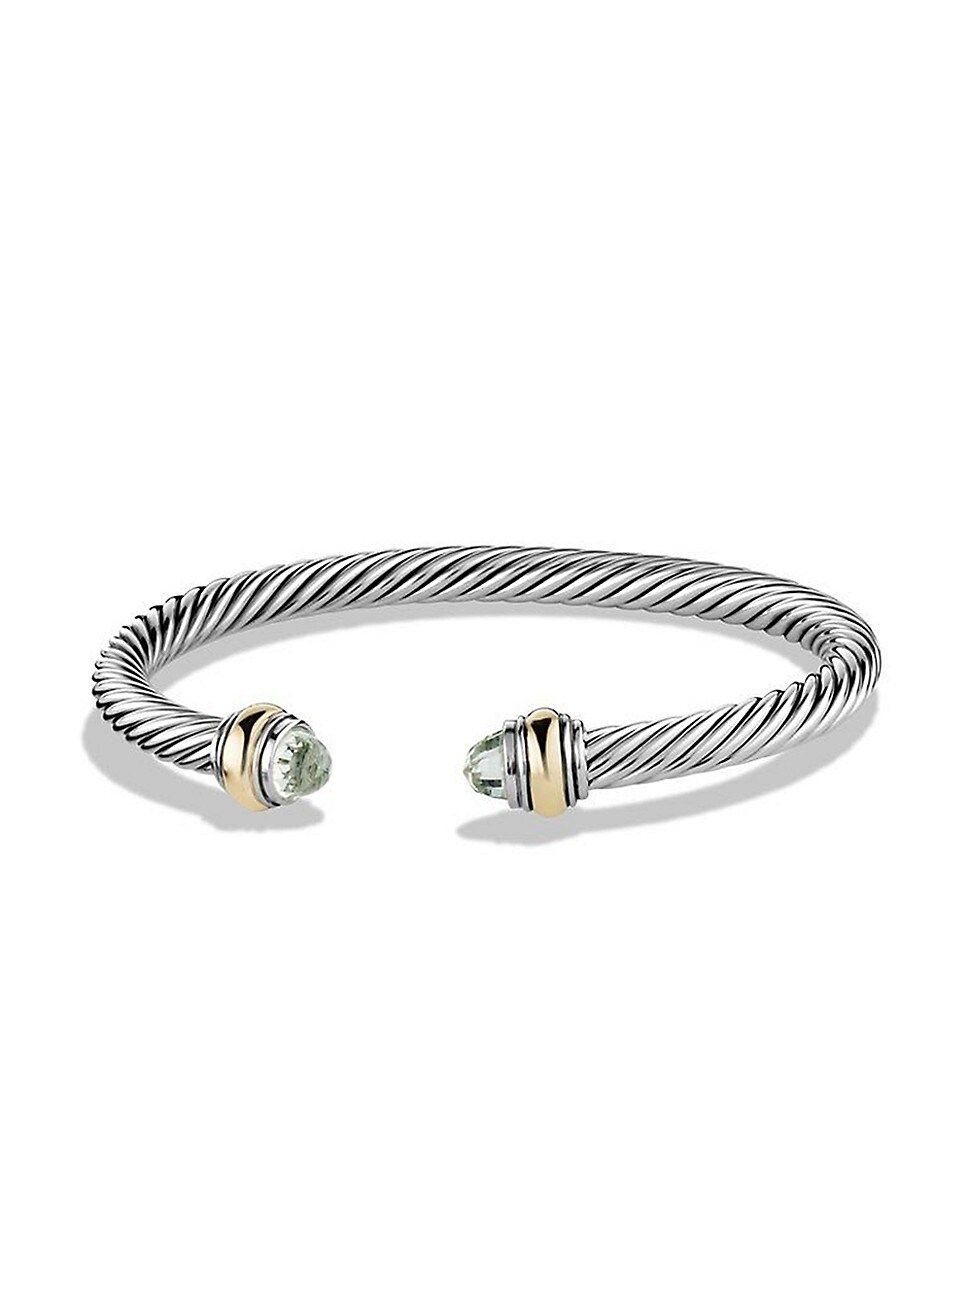 David Yurman Women's Cable Classics Bracelet With Gemstone & 14K Gold - Prasiolite - Size Medium | Saks Fifth Avenue